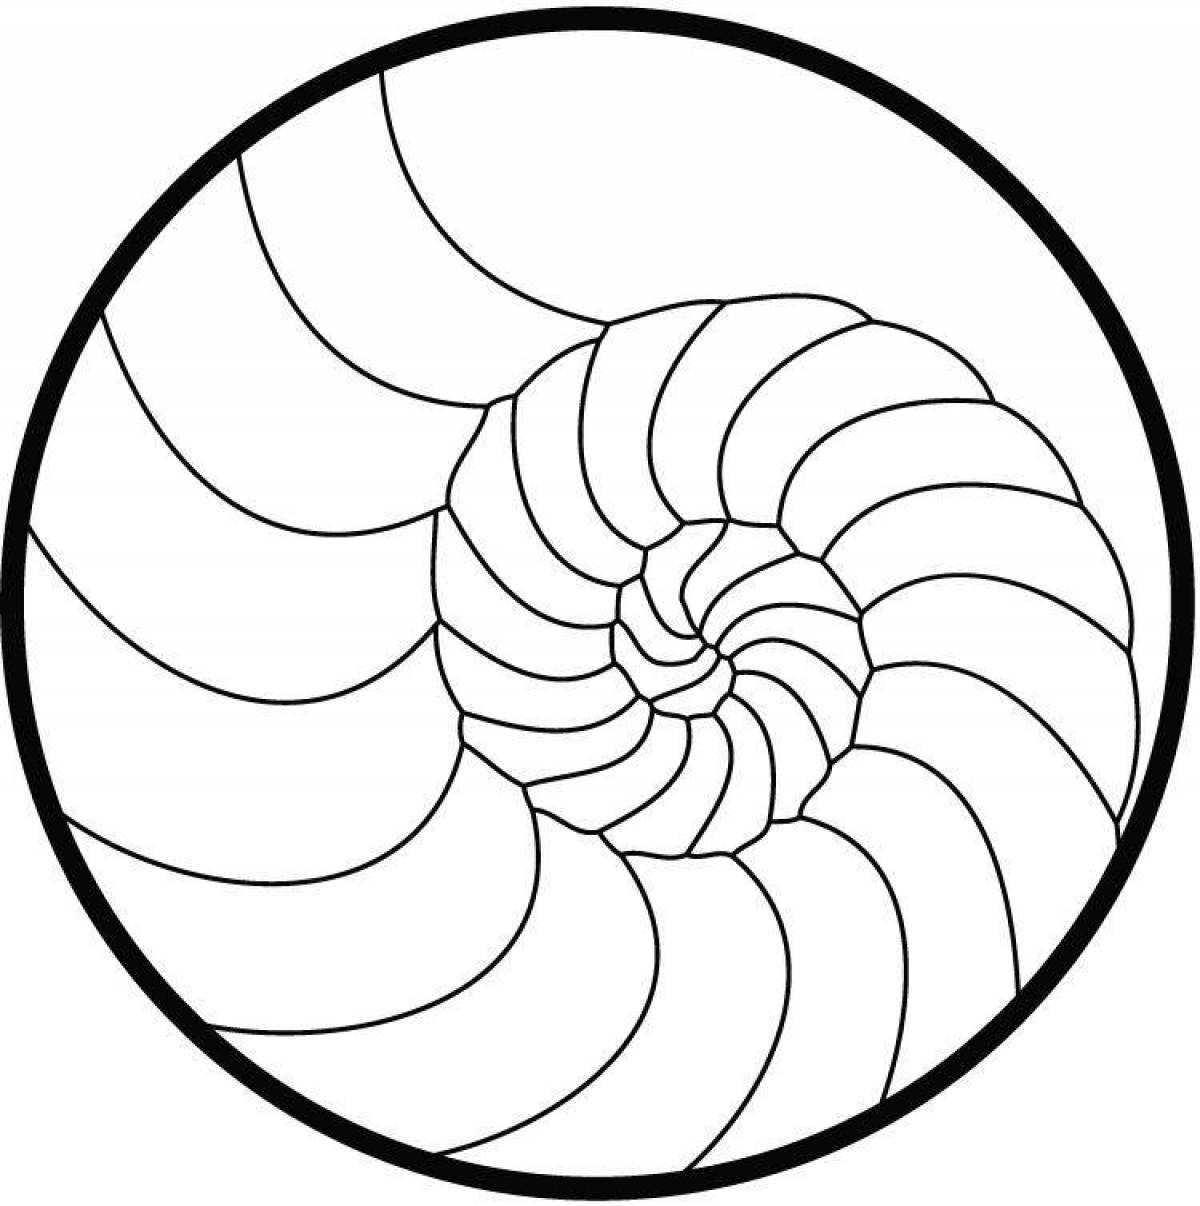 Colouring serene spiral